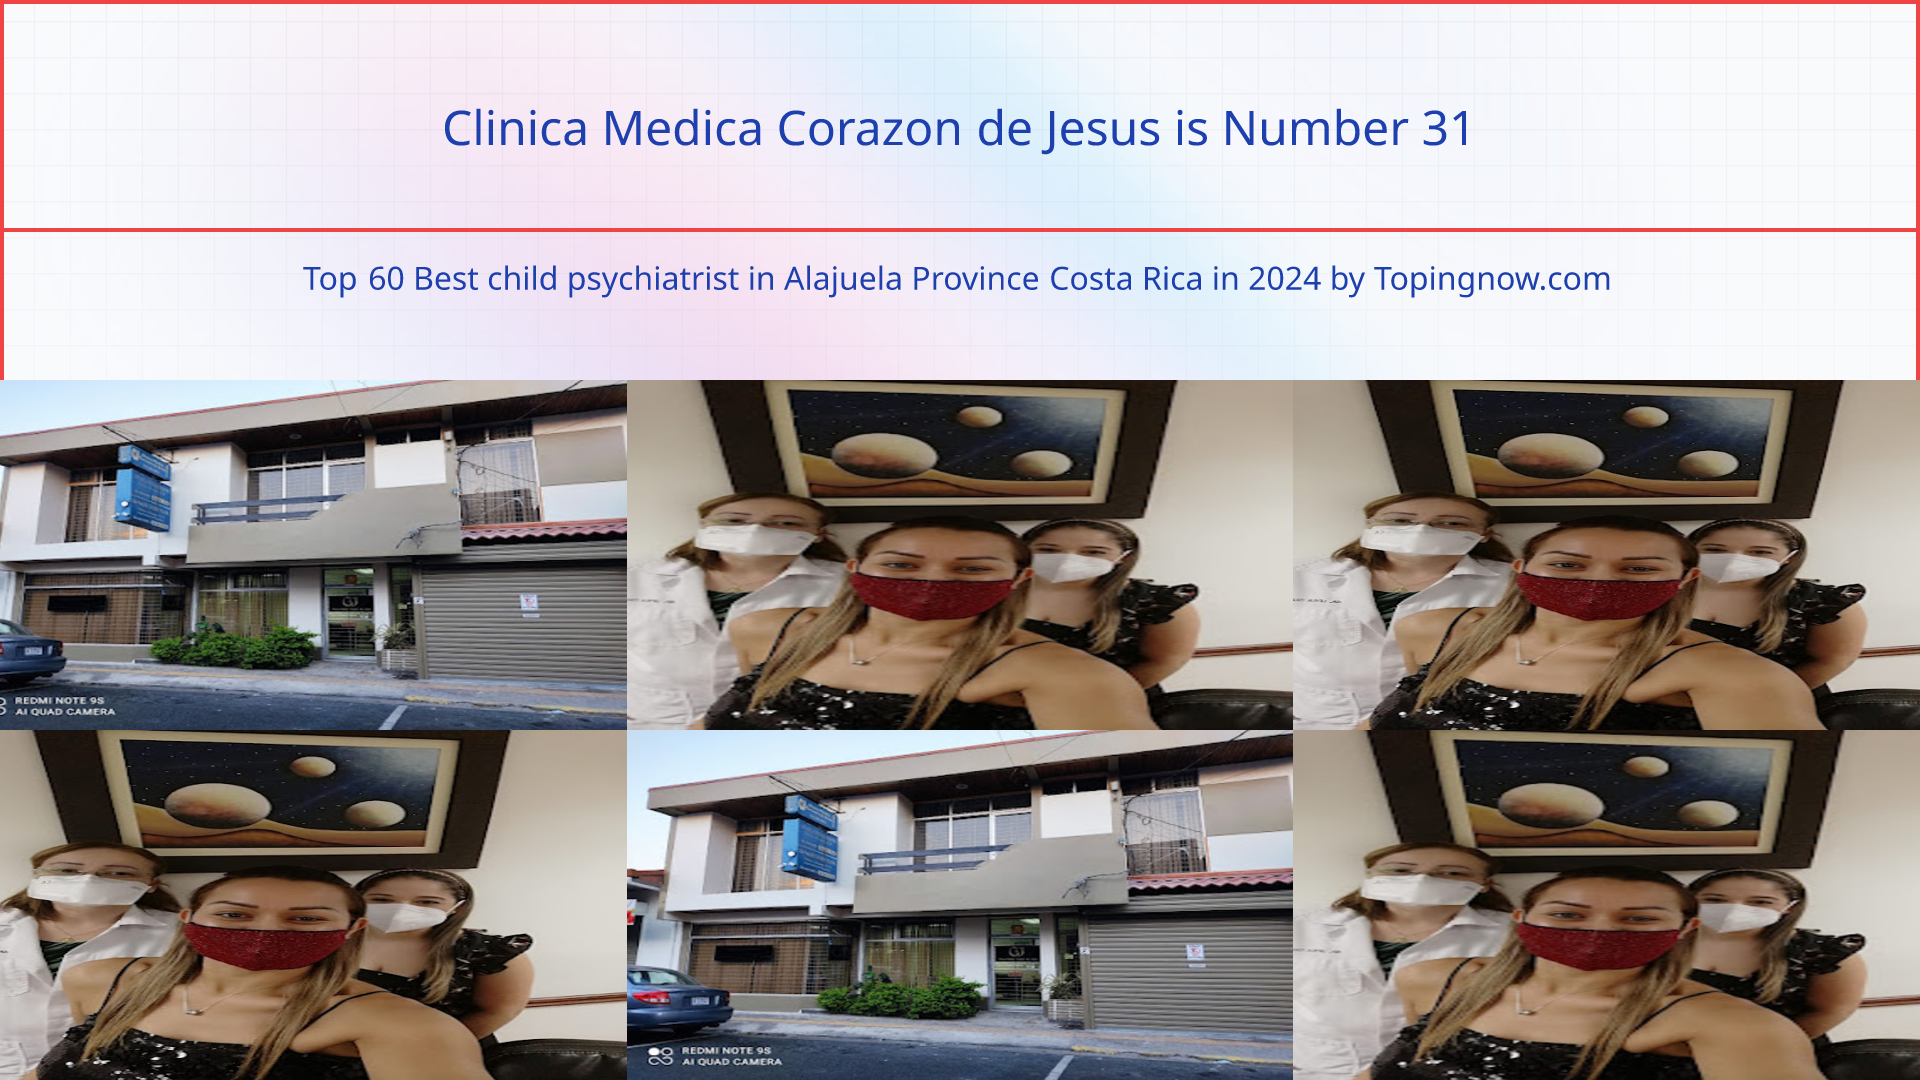 Clinica Medica Corazon de Jesus: Top 60 Best child psychiatrist in Alajuela Province Costa Rica in 2024